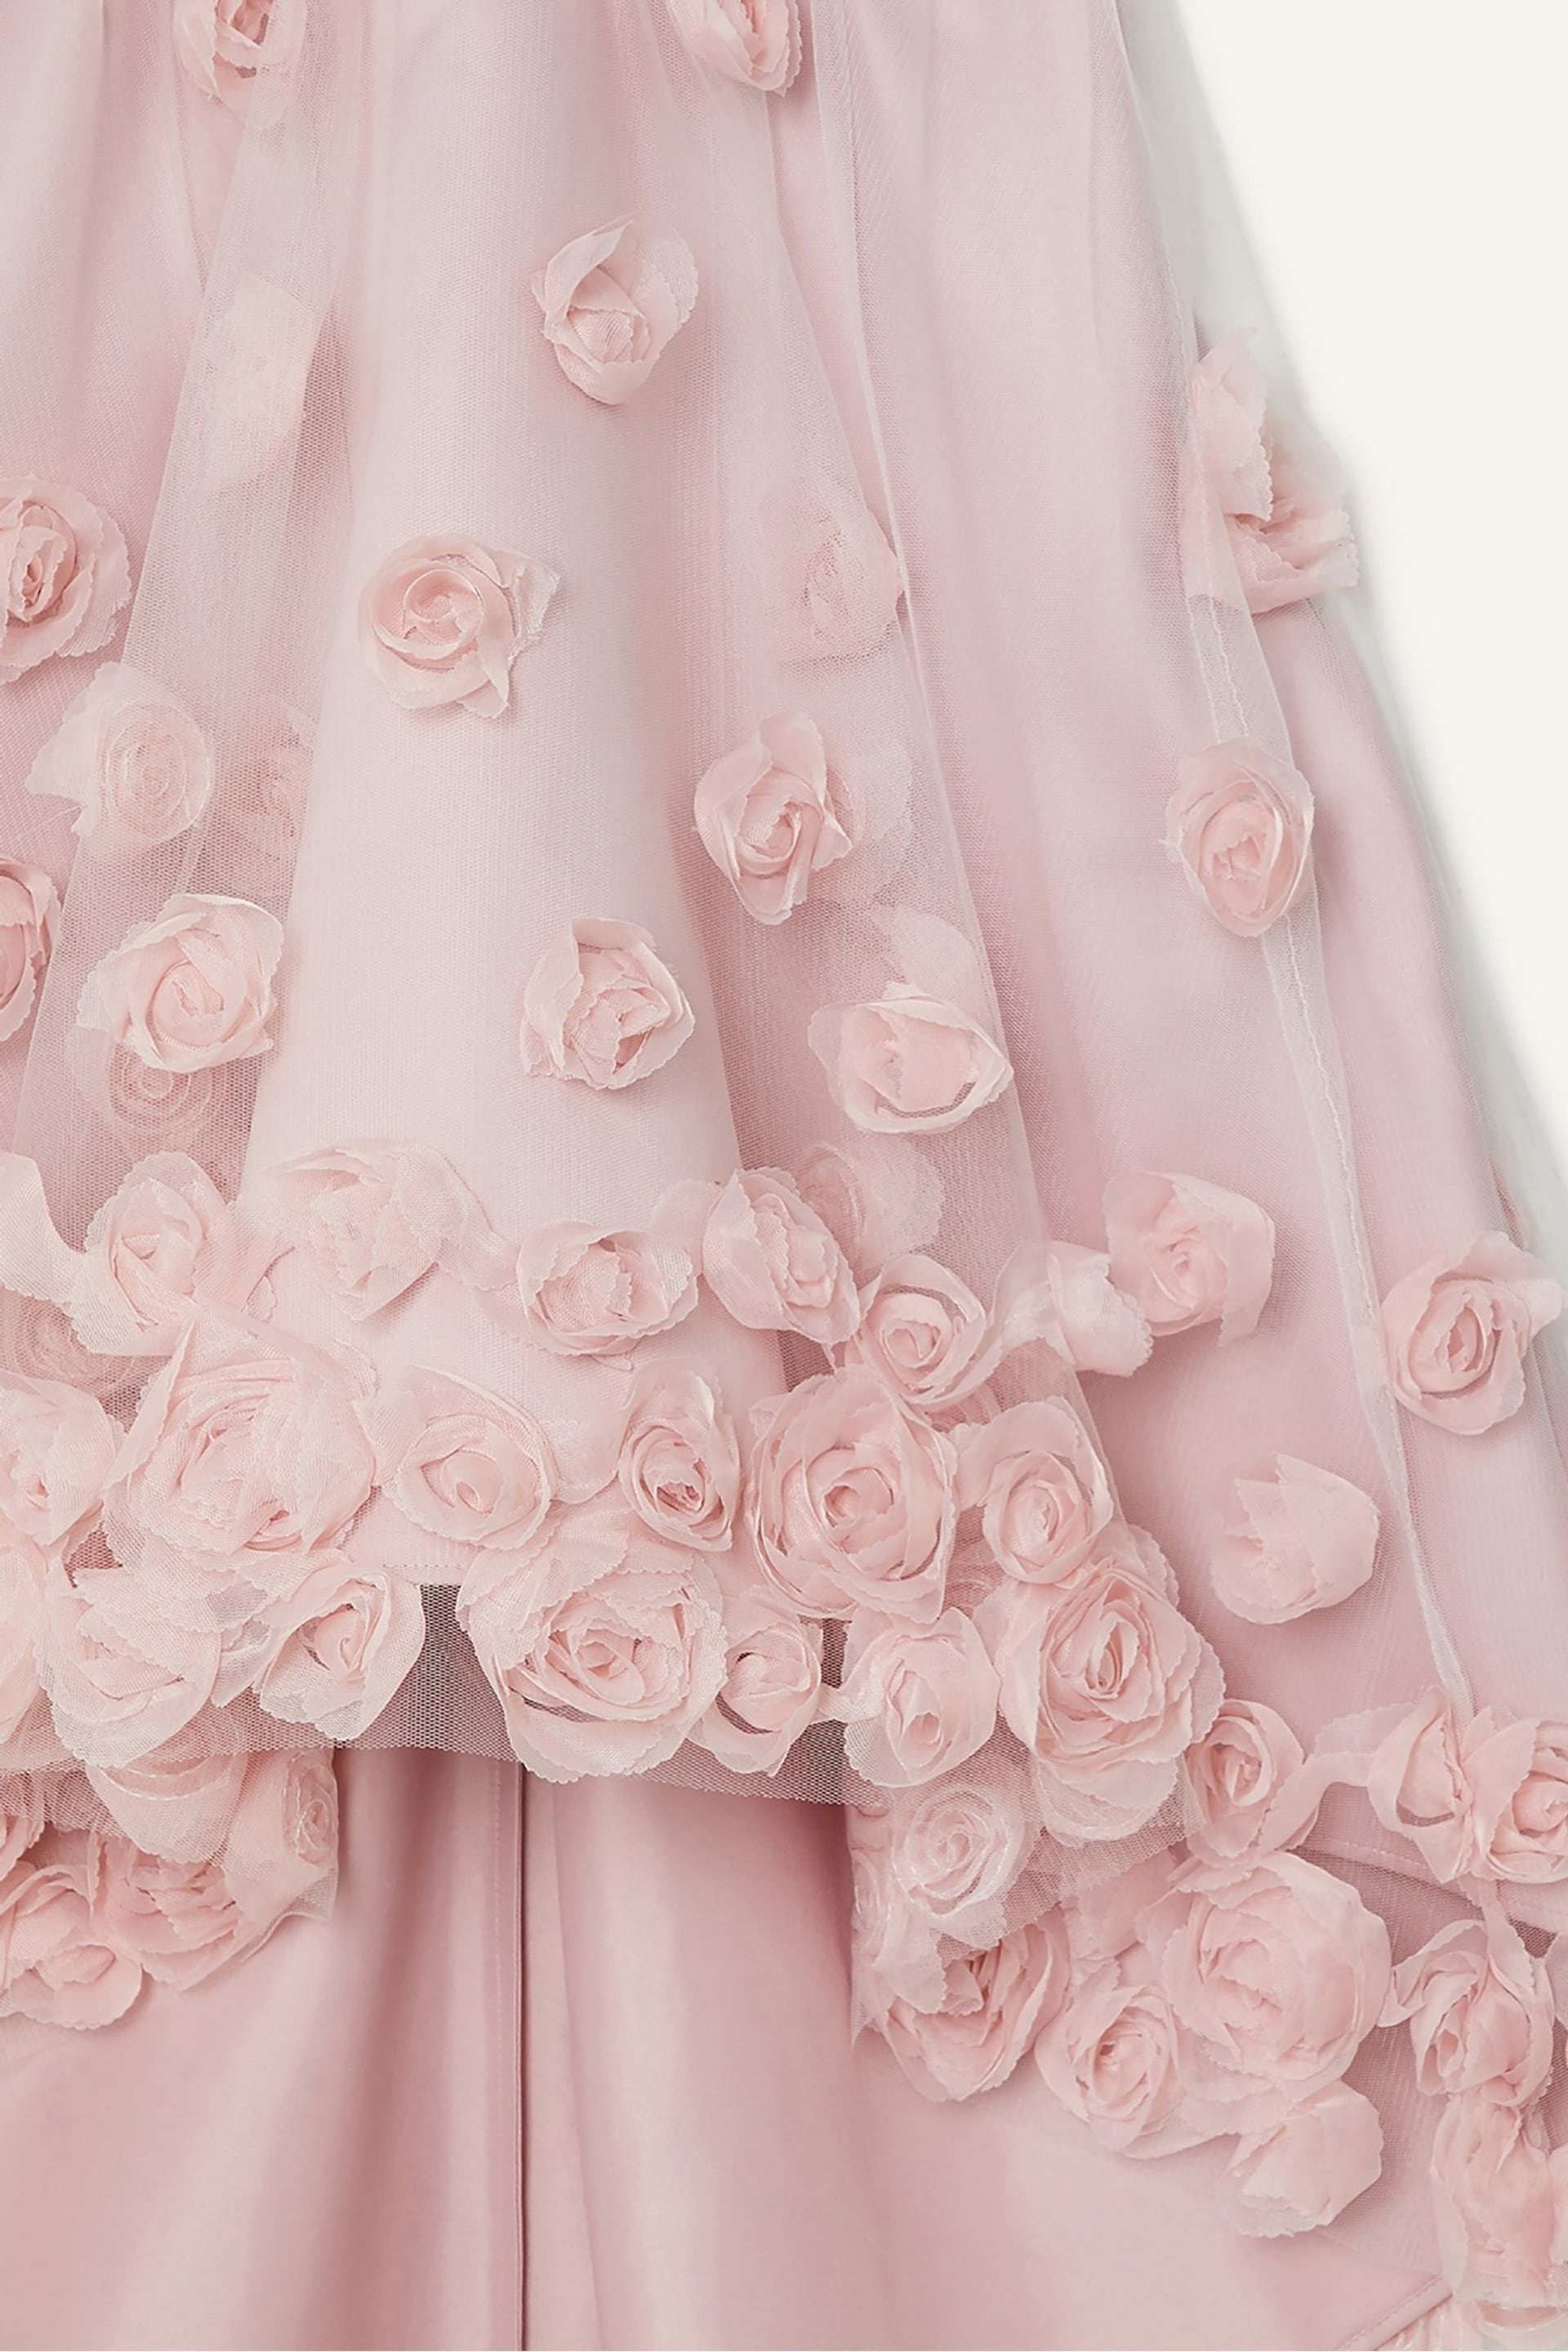 Monsoon Pink Ianthe 3D Flower Dress - Image 3 of 3